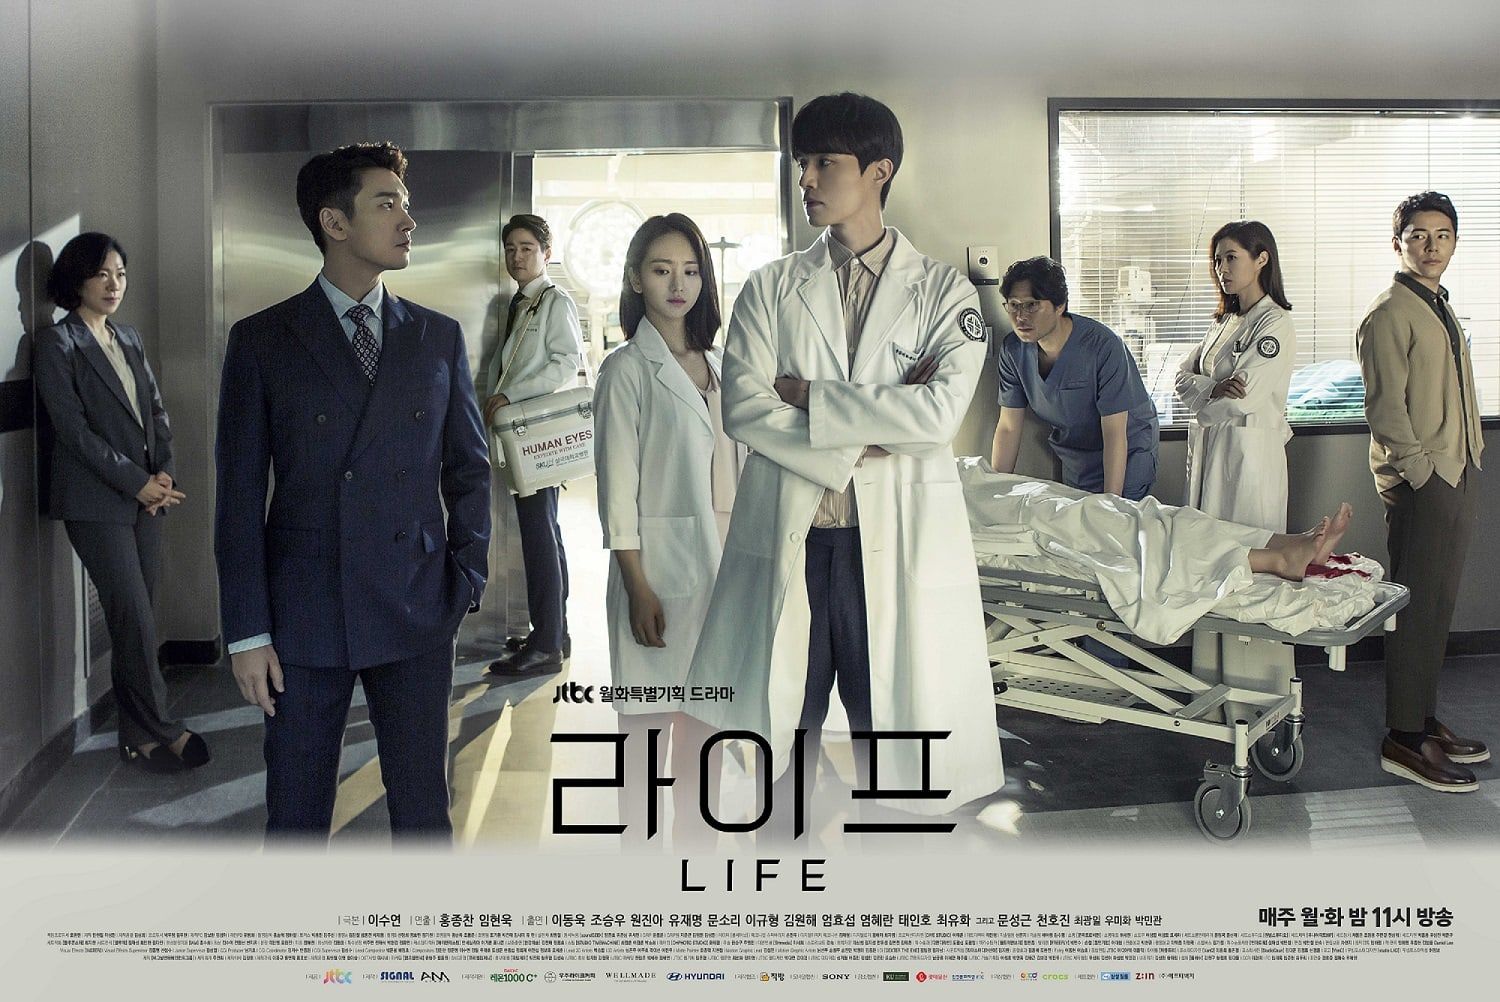 Drama Korea Life dibintangi oleh Lee Dong Wook.